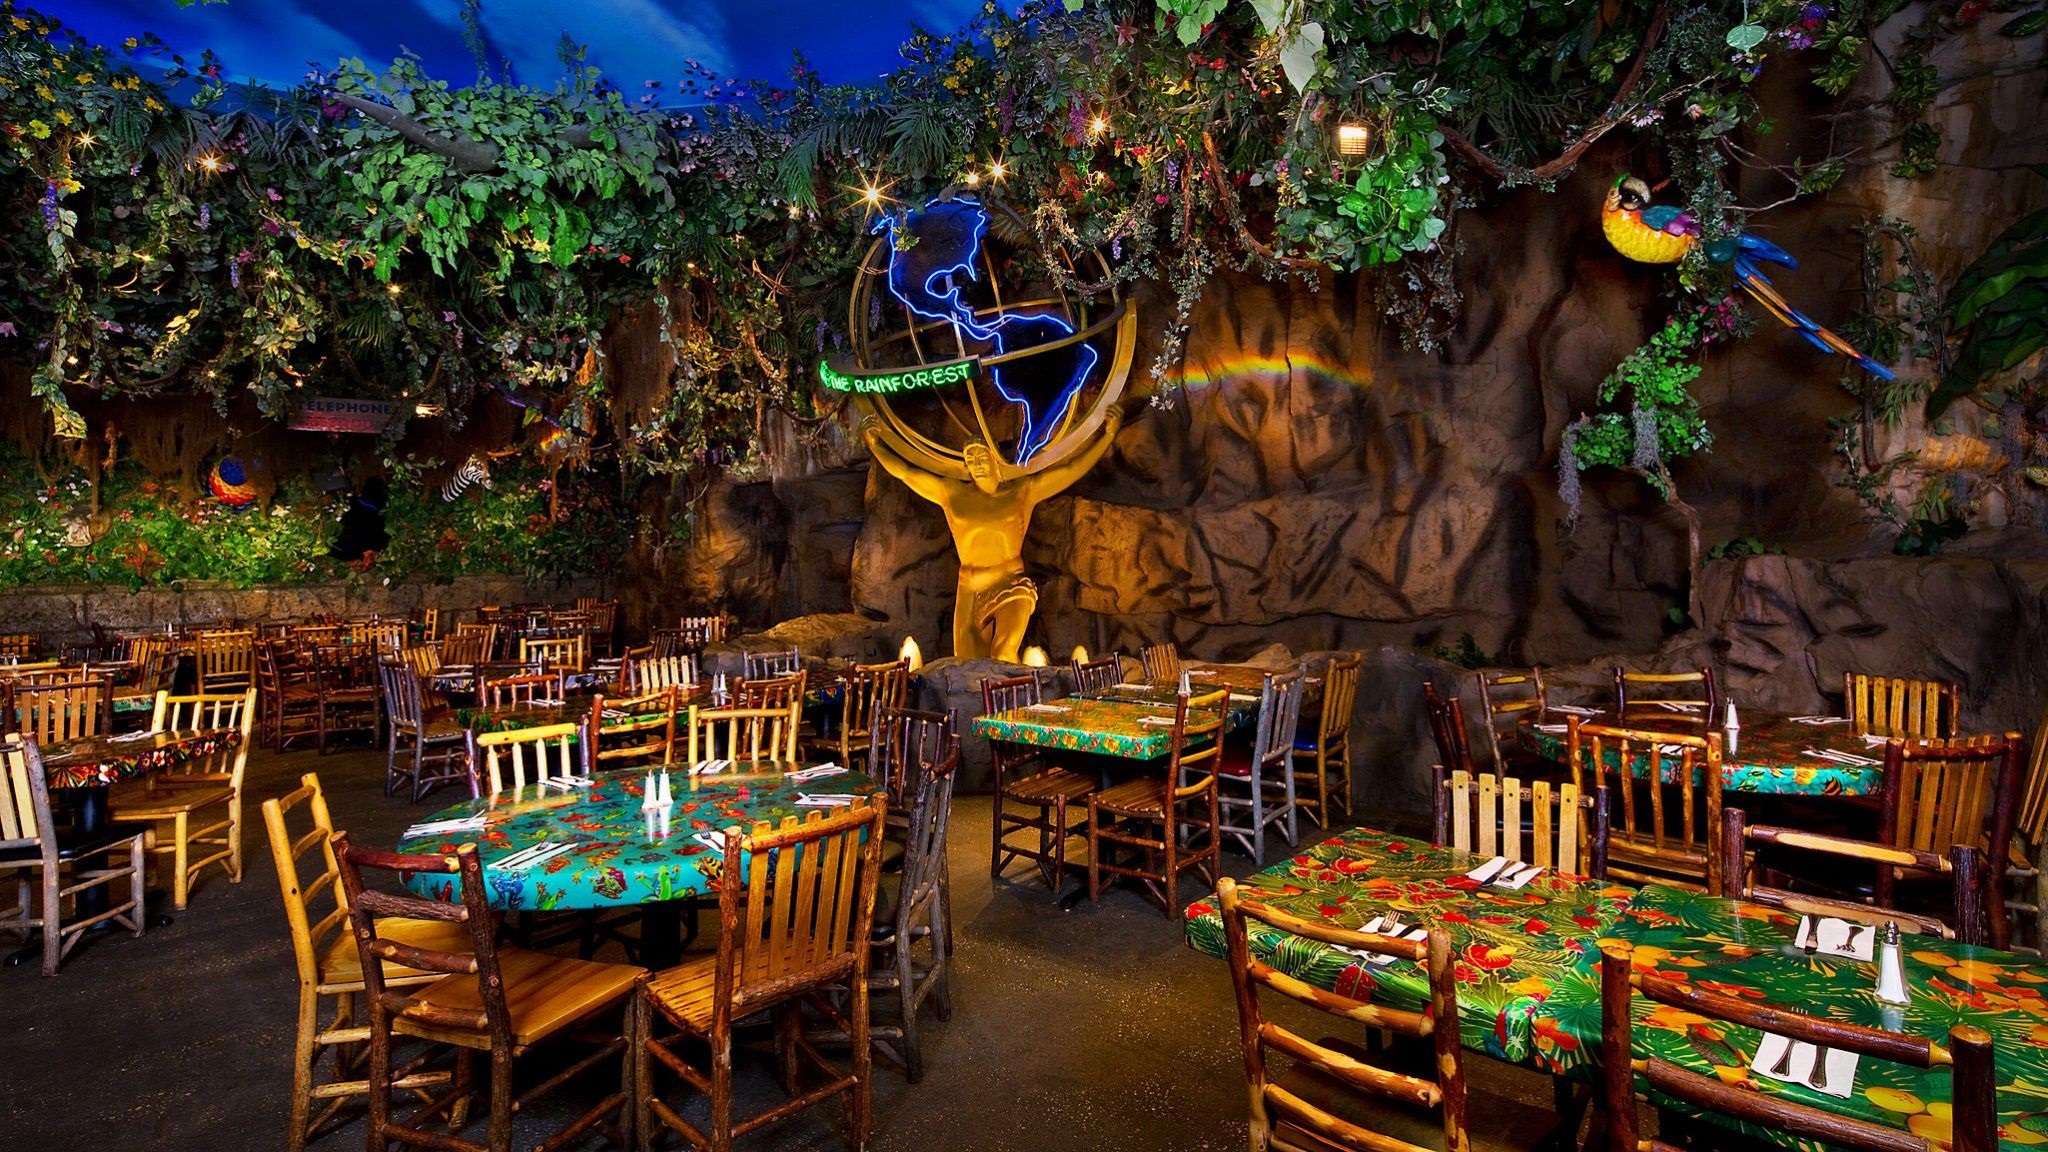 Rainforest Cafe - Restaurant at Disney